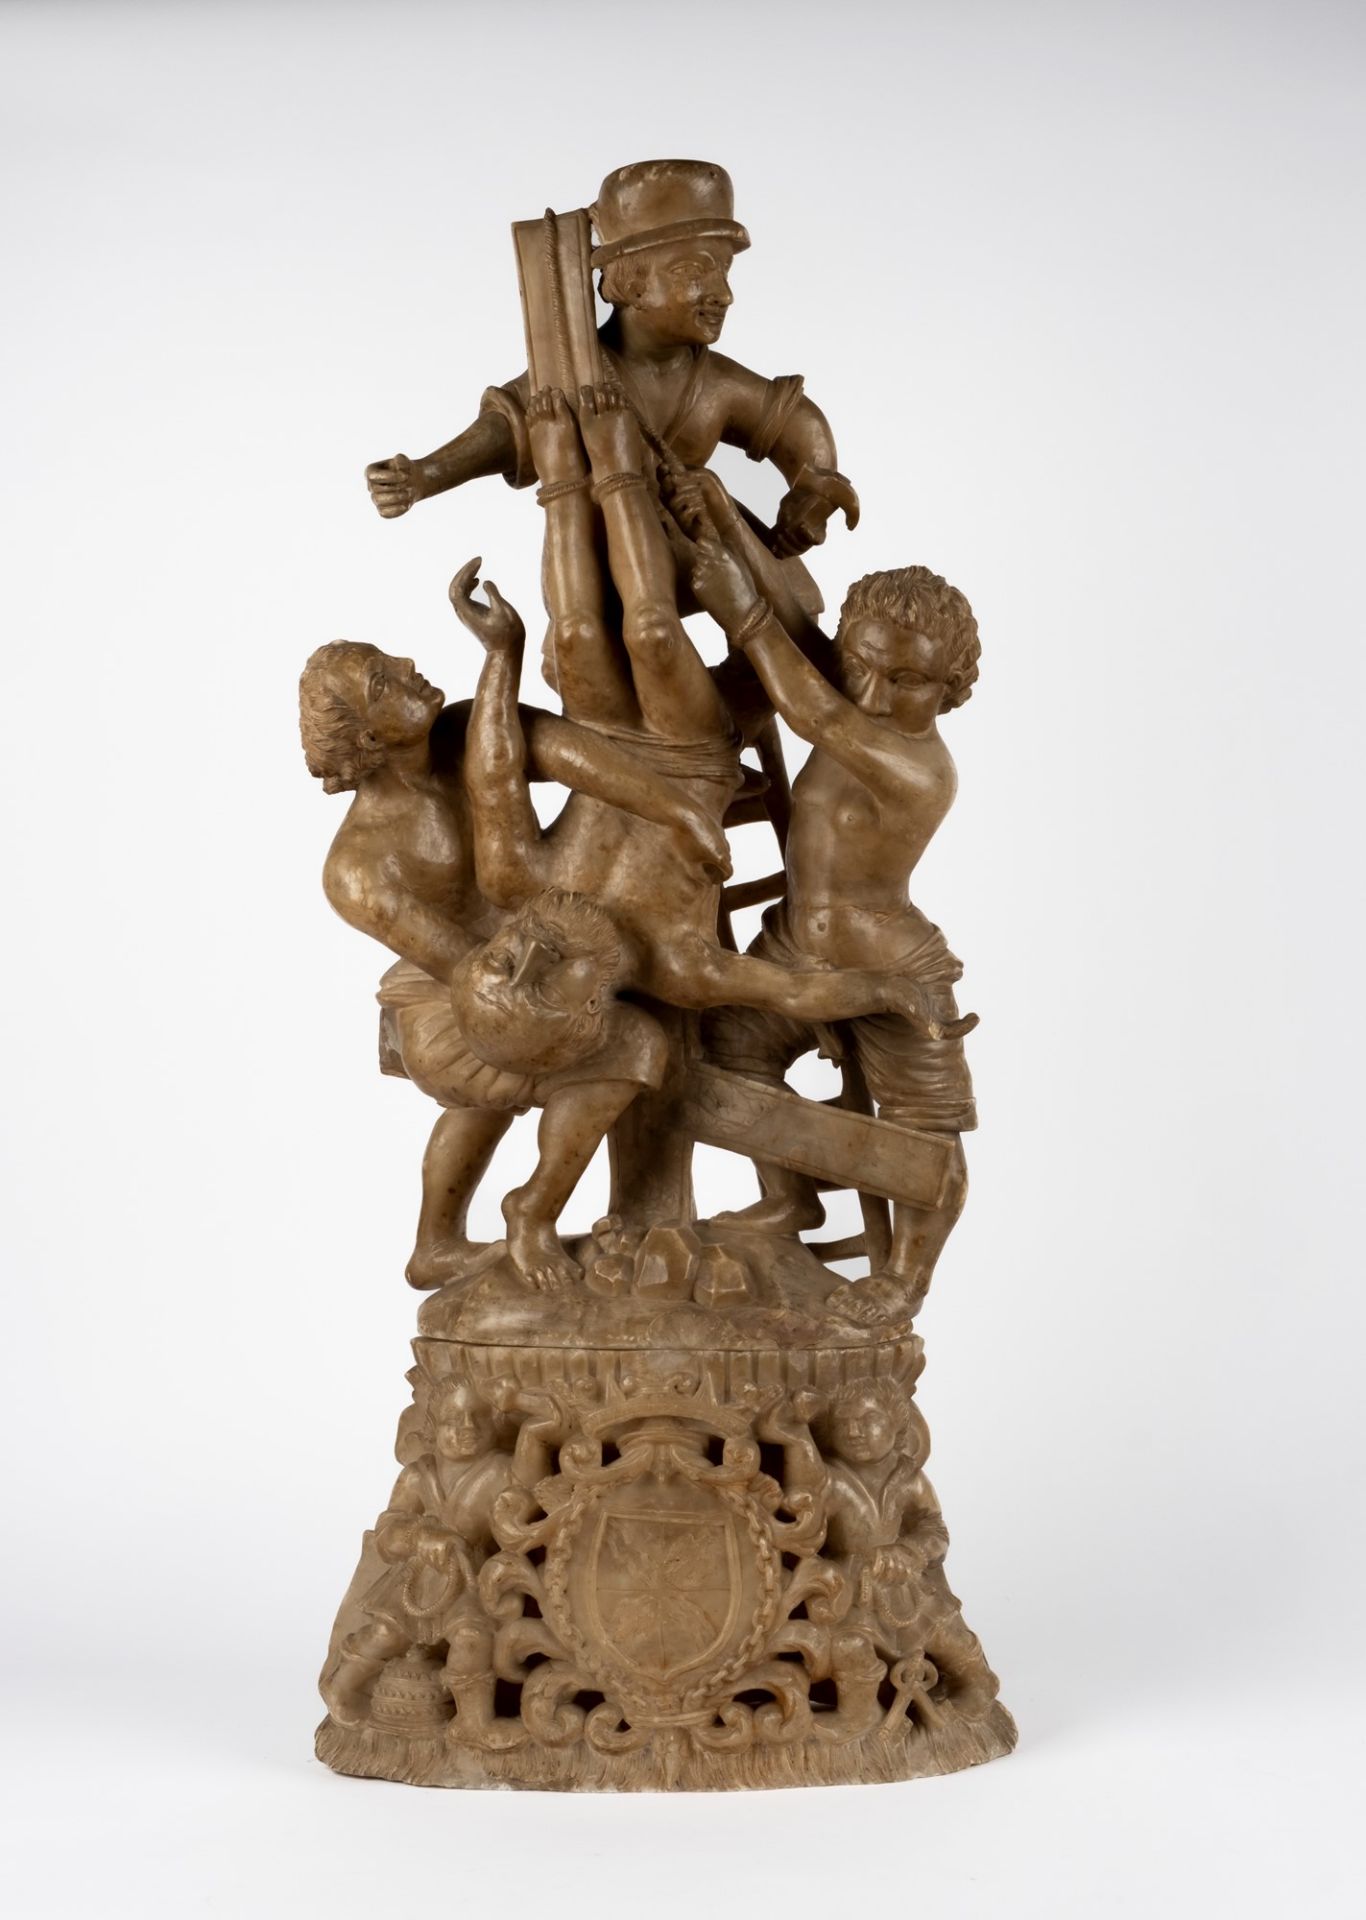 Alabaster sculpture depicting "Deposition". Sicily, 17th century